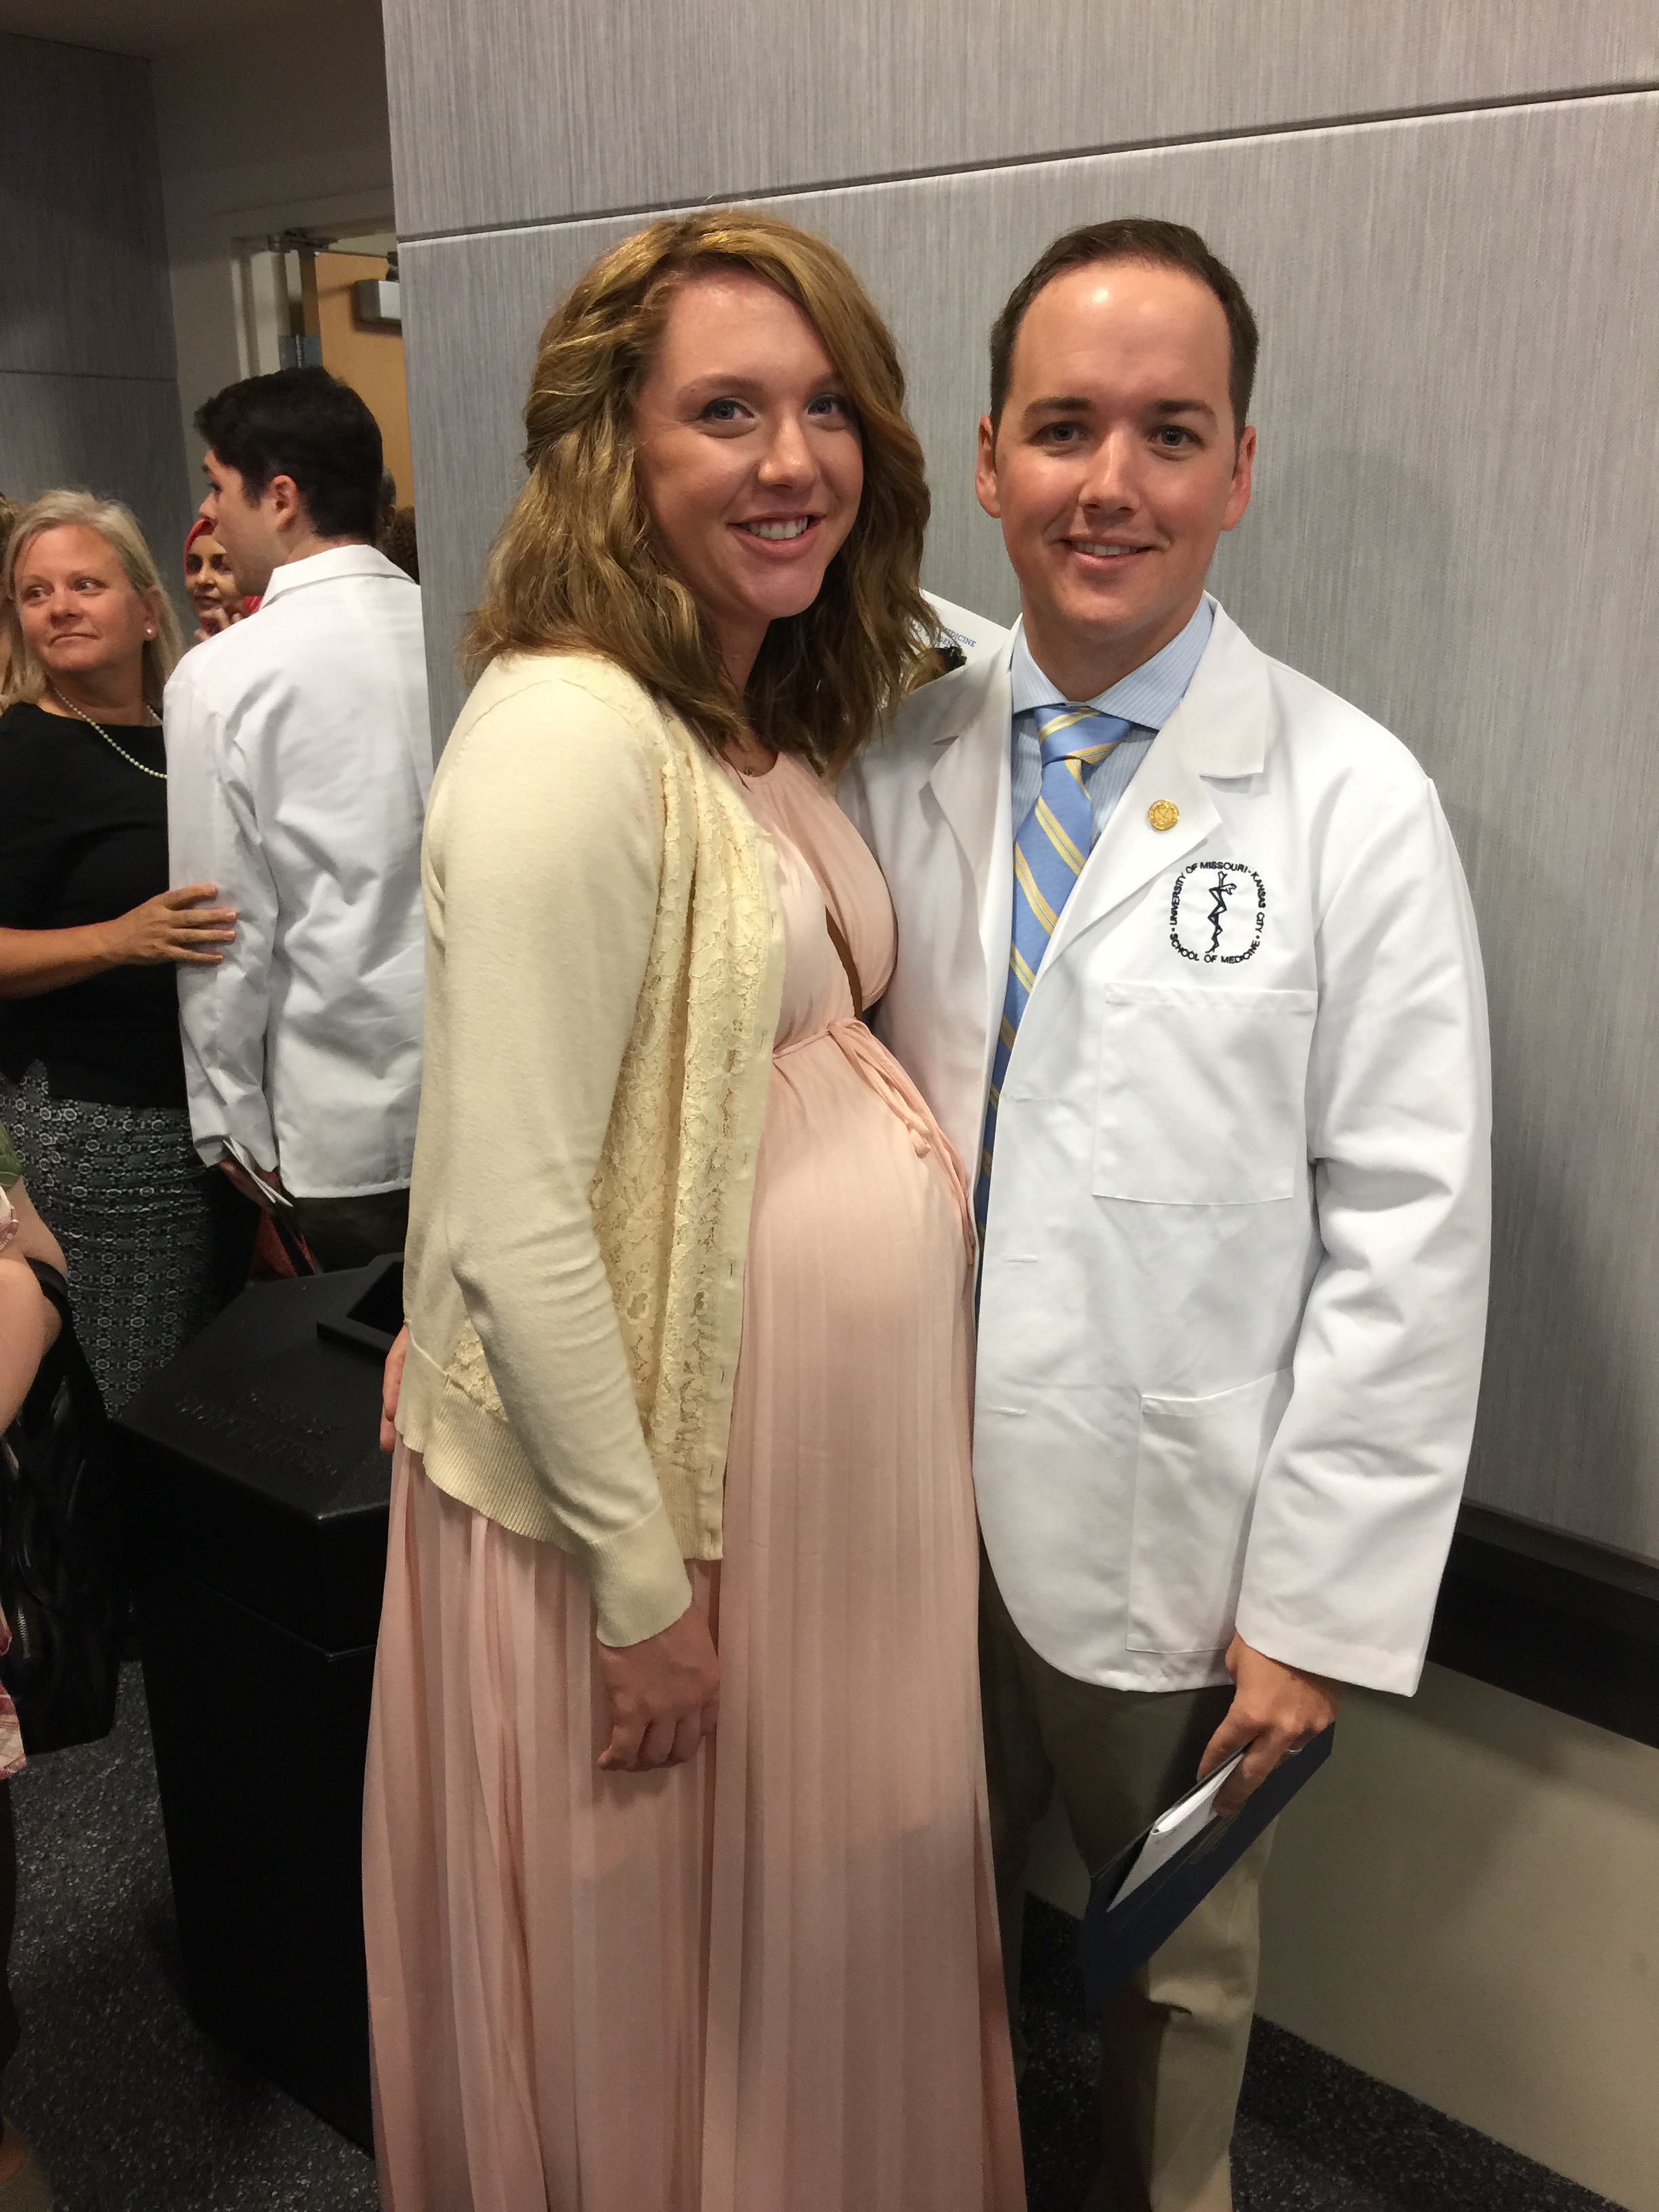 Caleb and Tara White Coat Ceremony Medical School